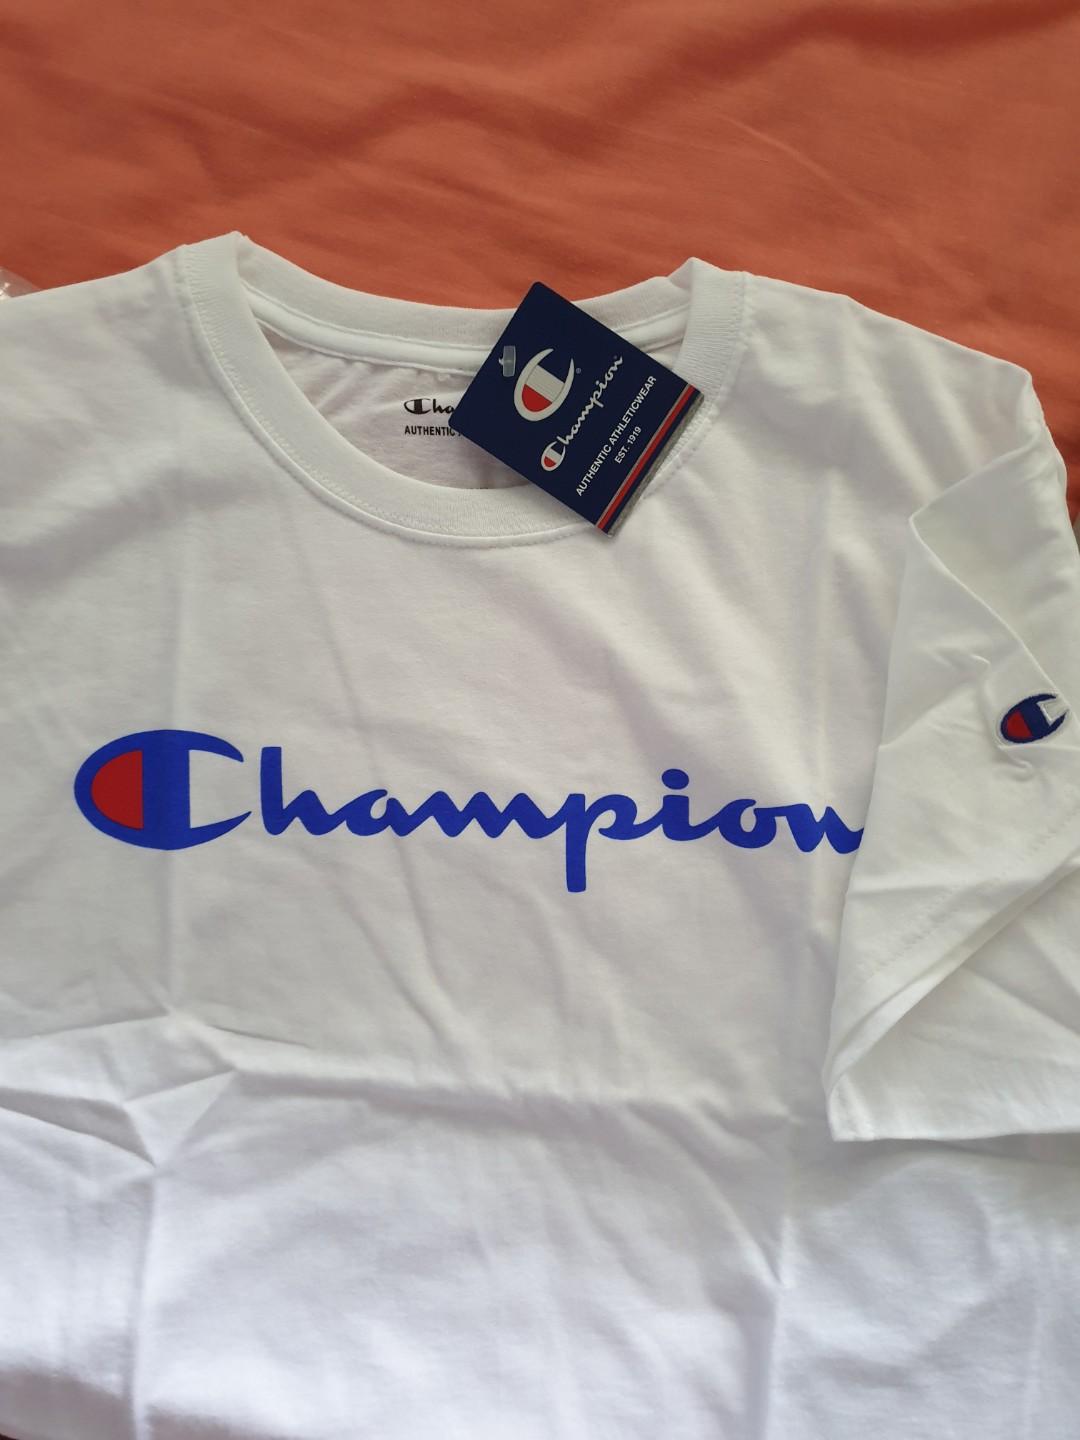 navy blue and white champion shirt